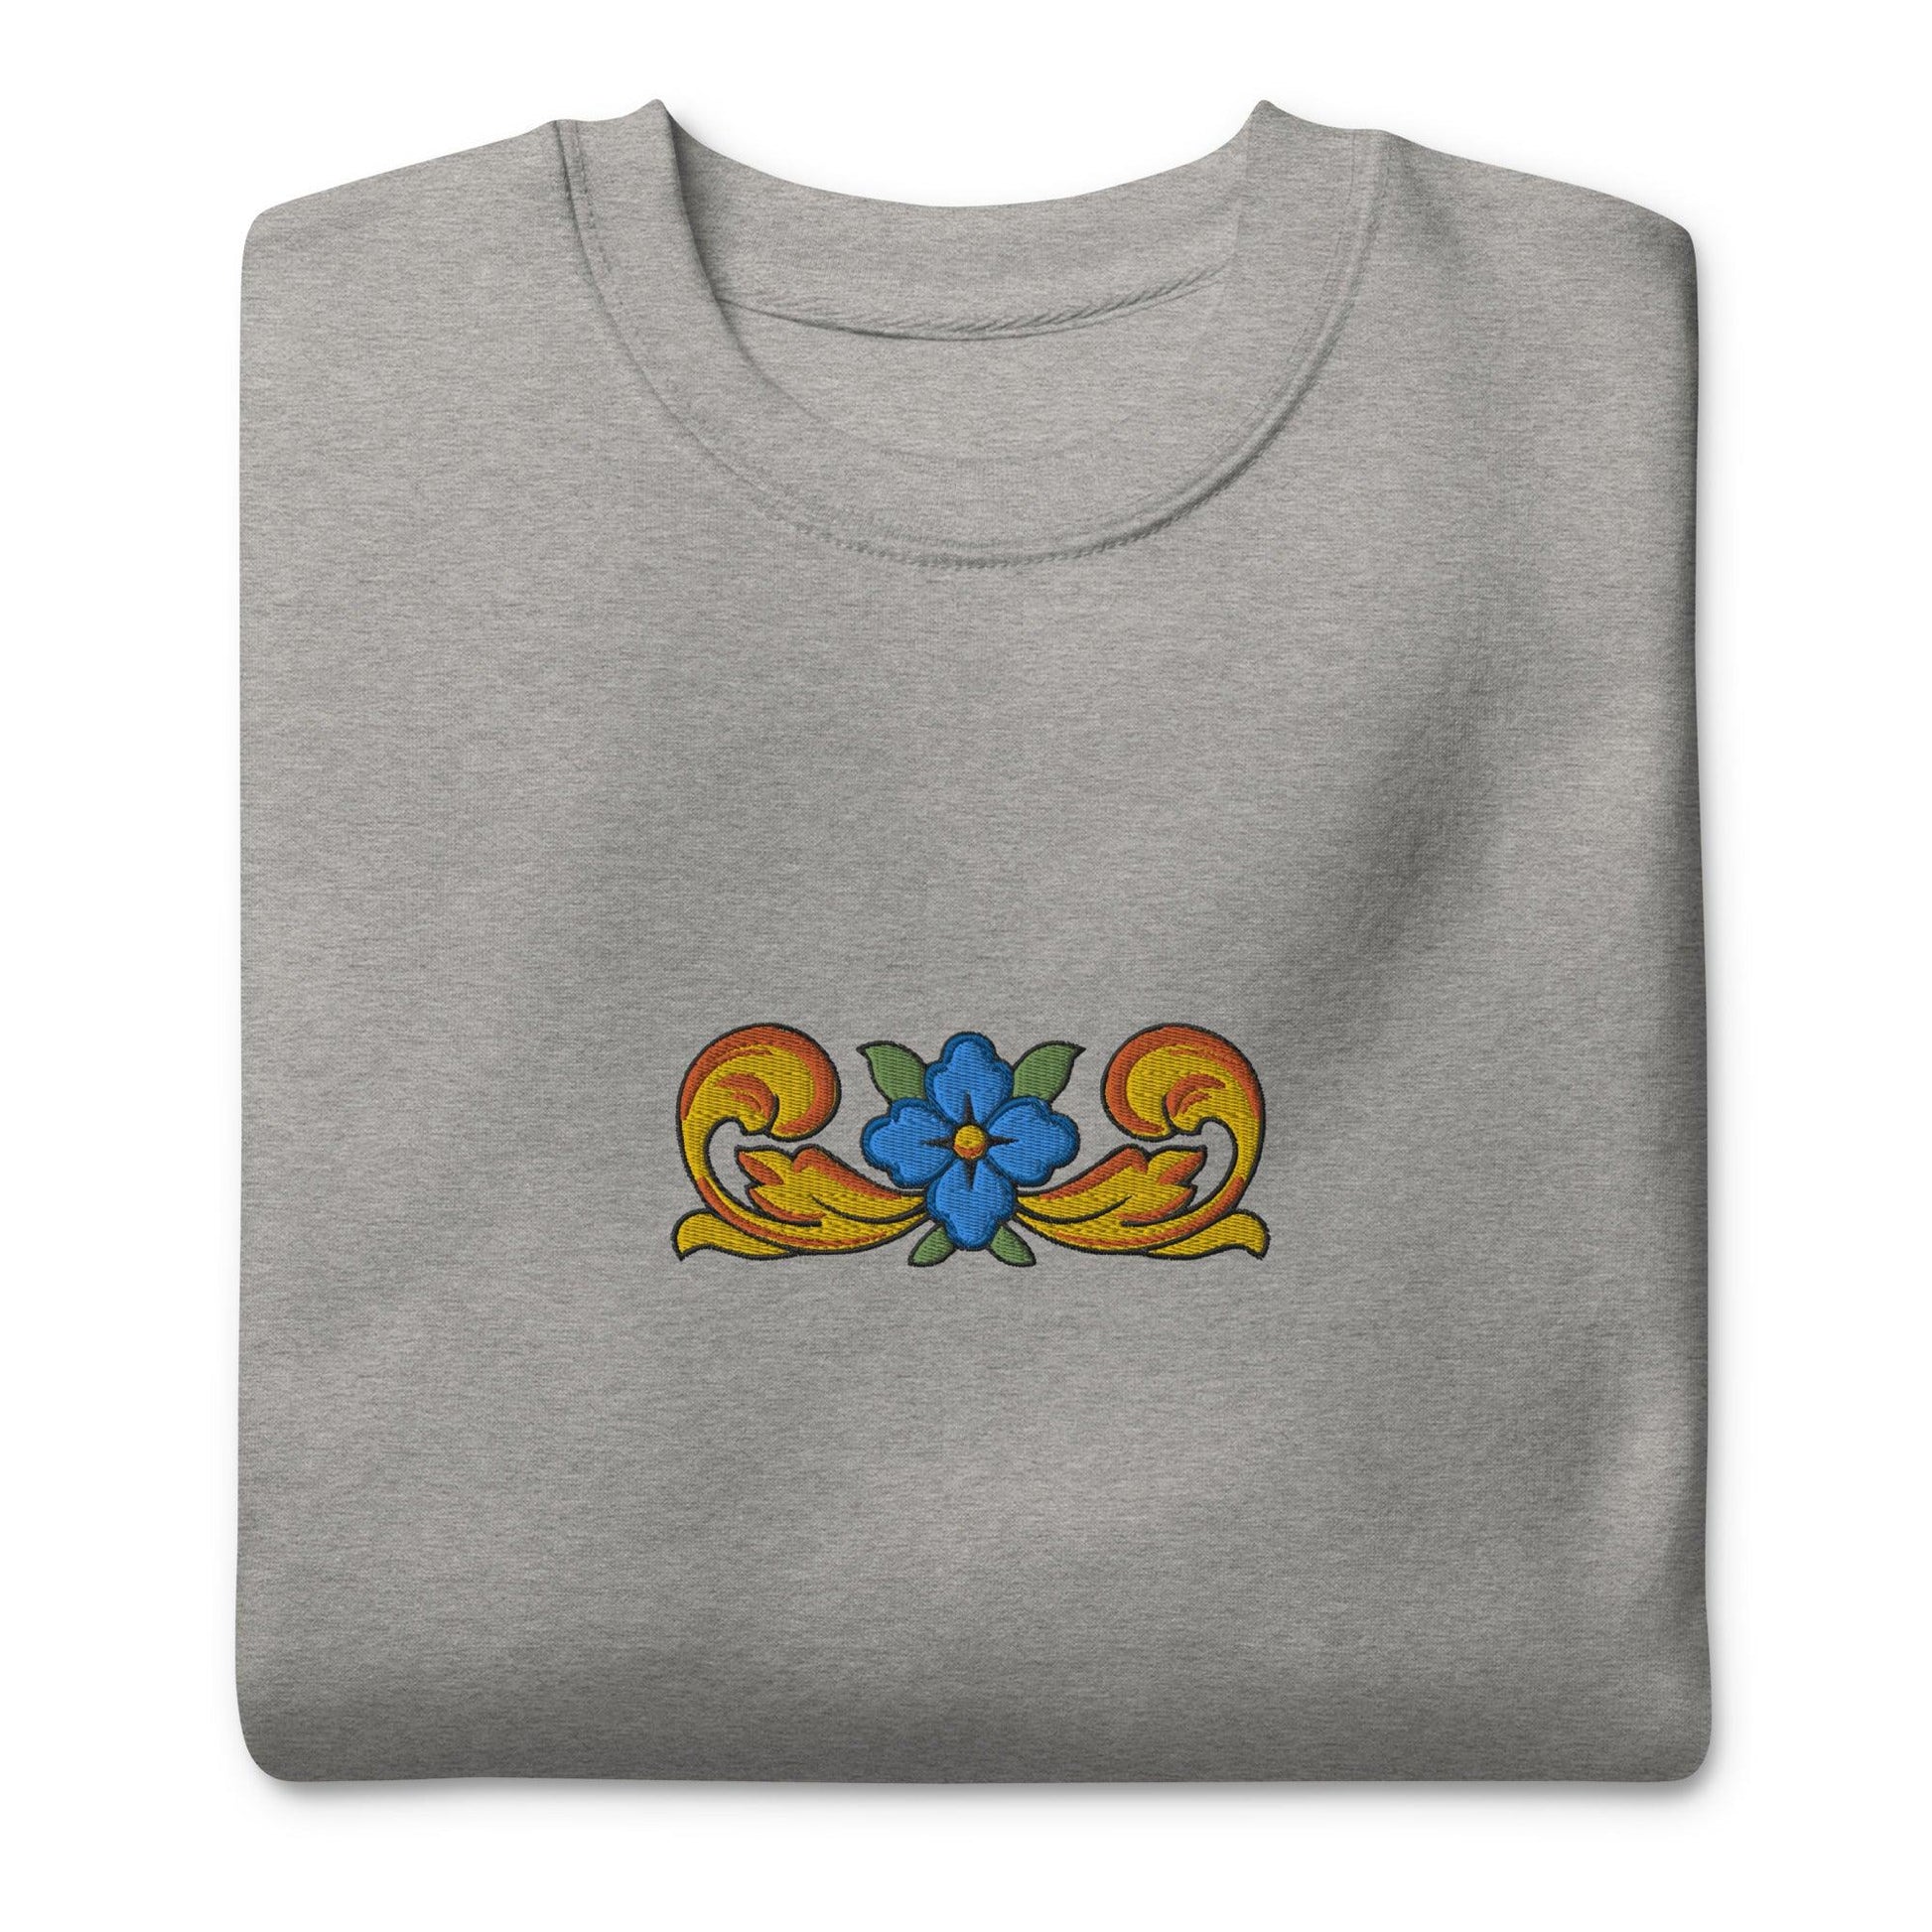 Sicilian Tile Motif Embroidered Sweatshirt - The Global Wanderer